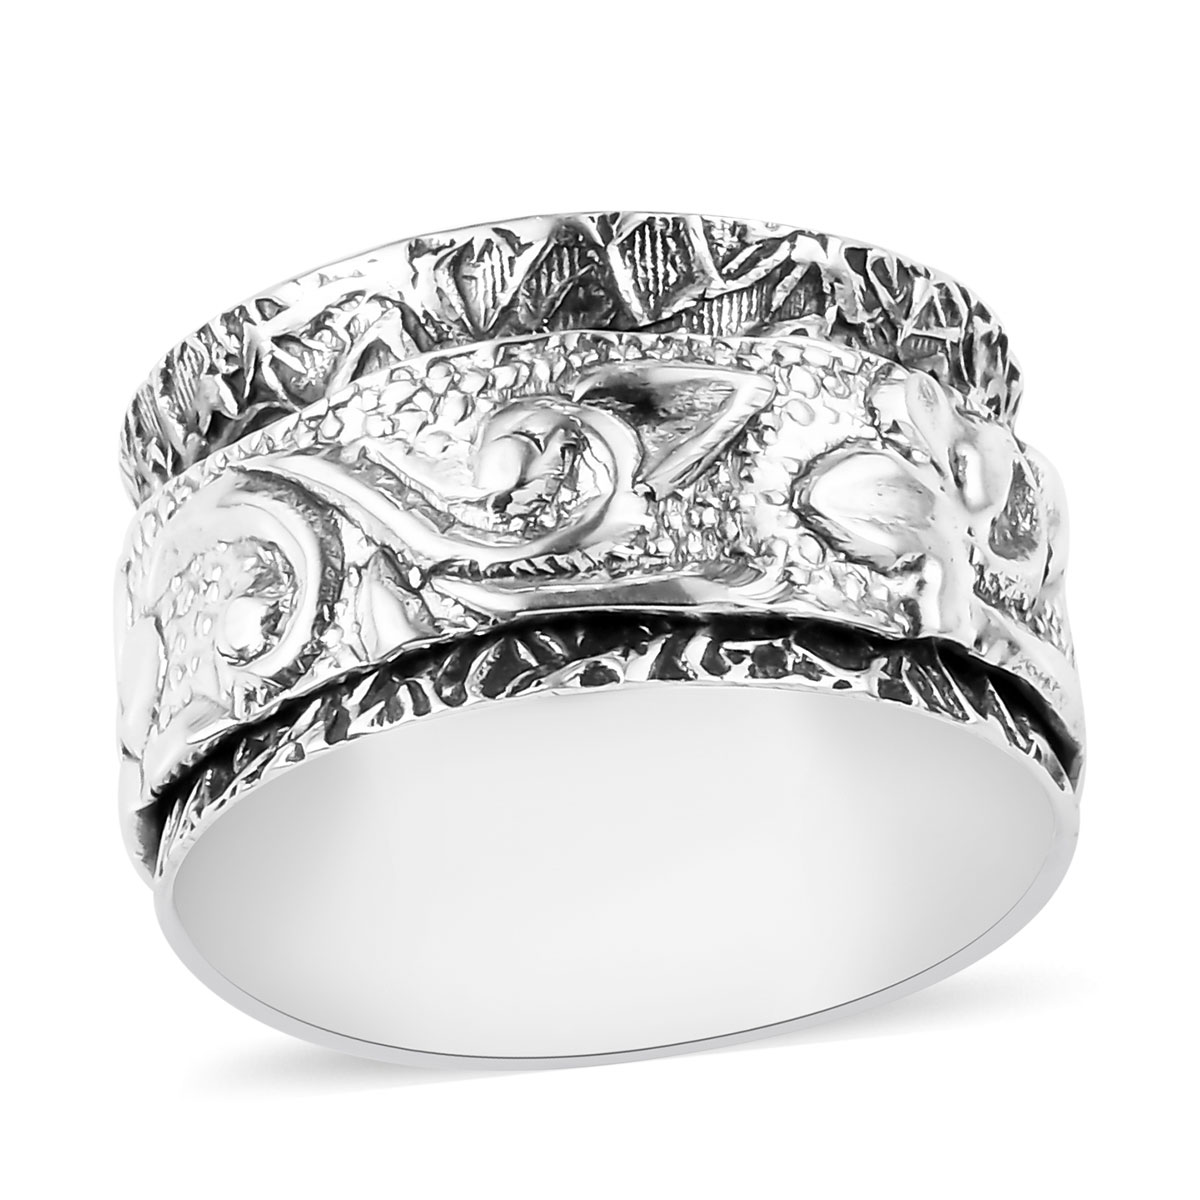 925 Sterling Silver Handmade Ring Worry Ring Spinner Ring Women Ring Gift For Her Pearl Ring Promised Ring Meditation Ring